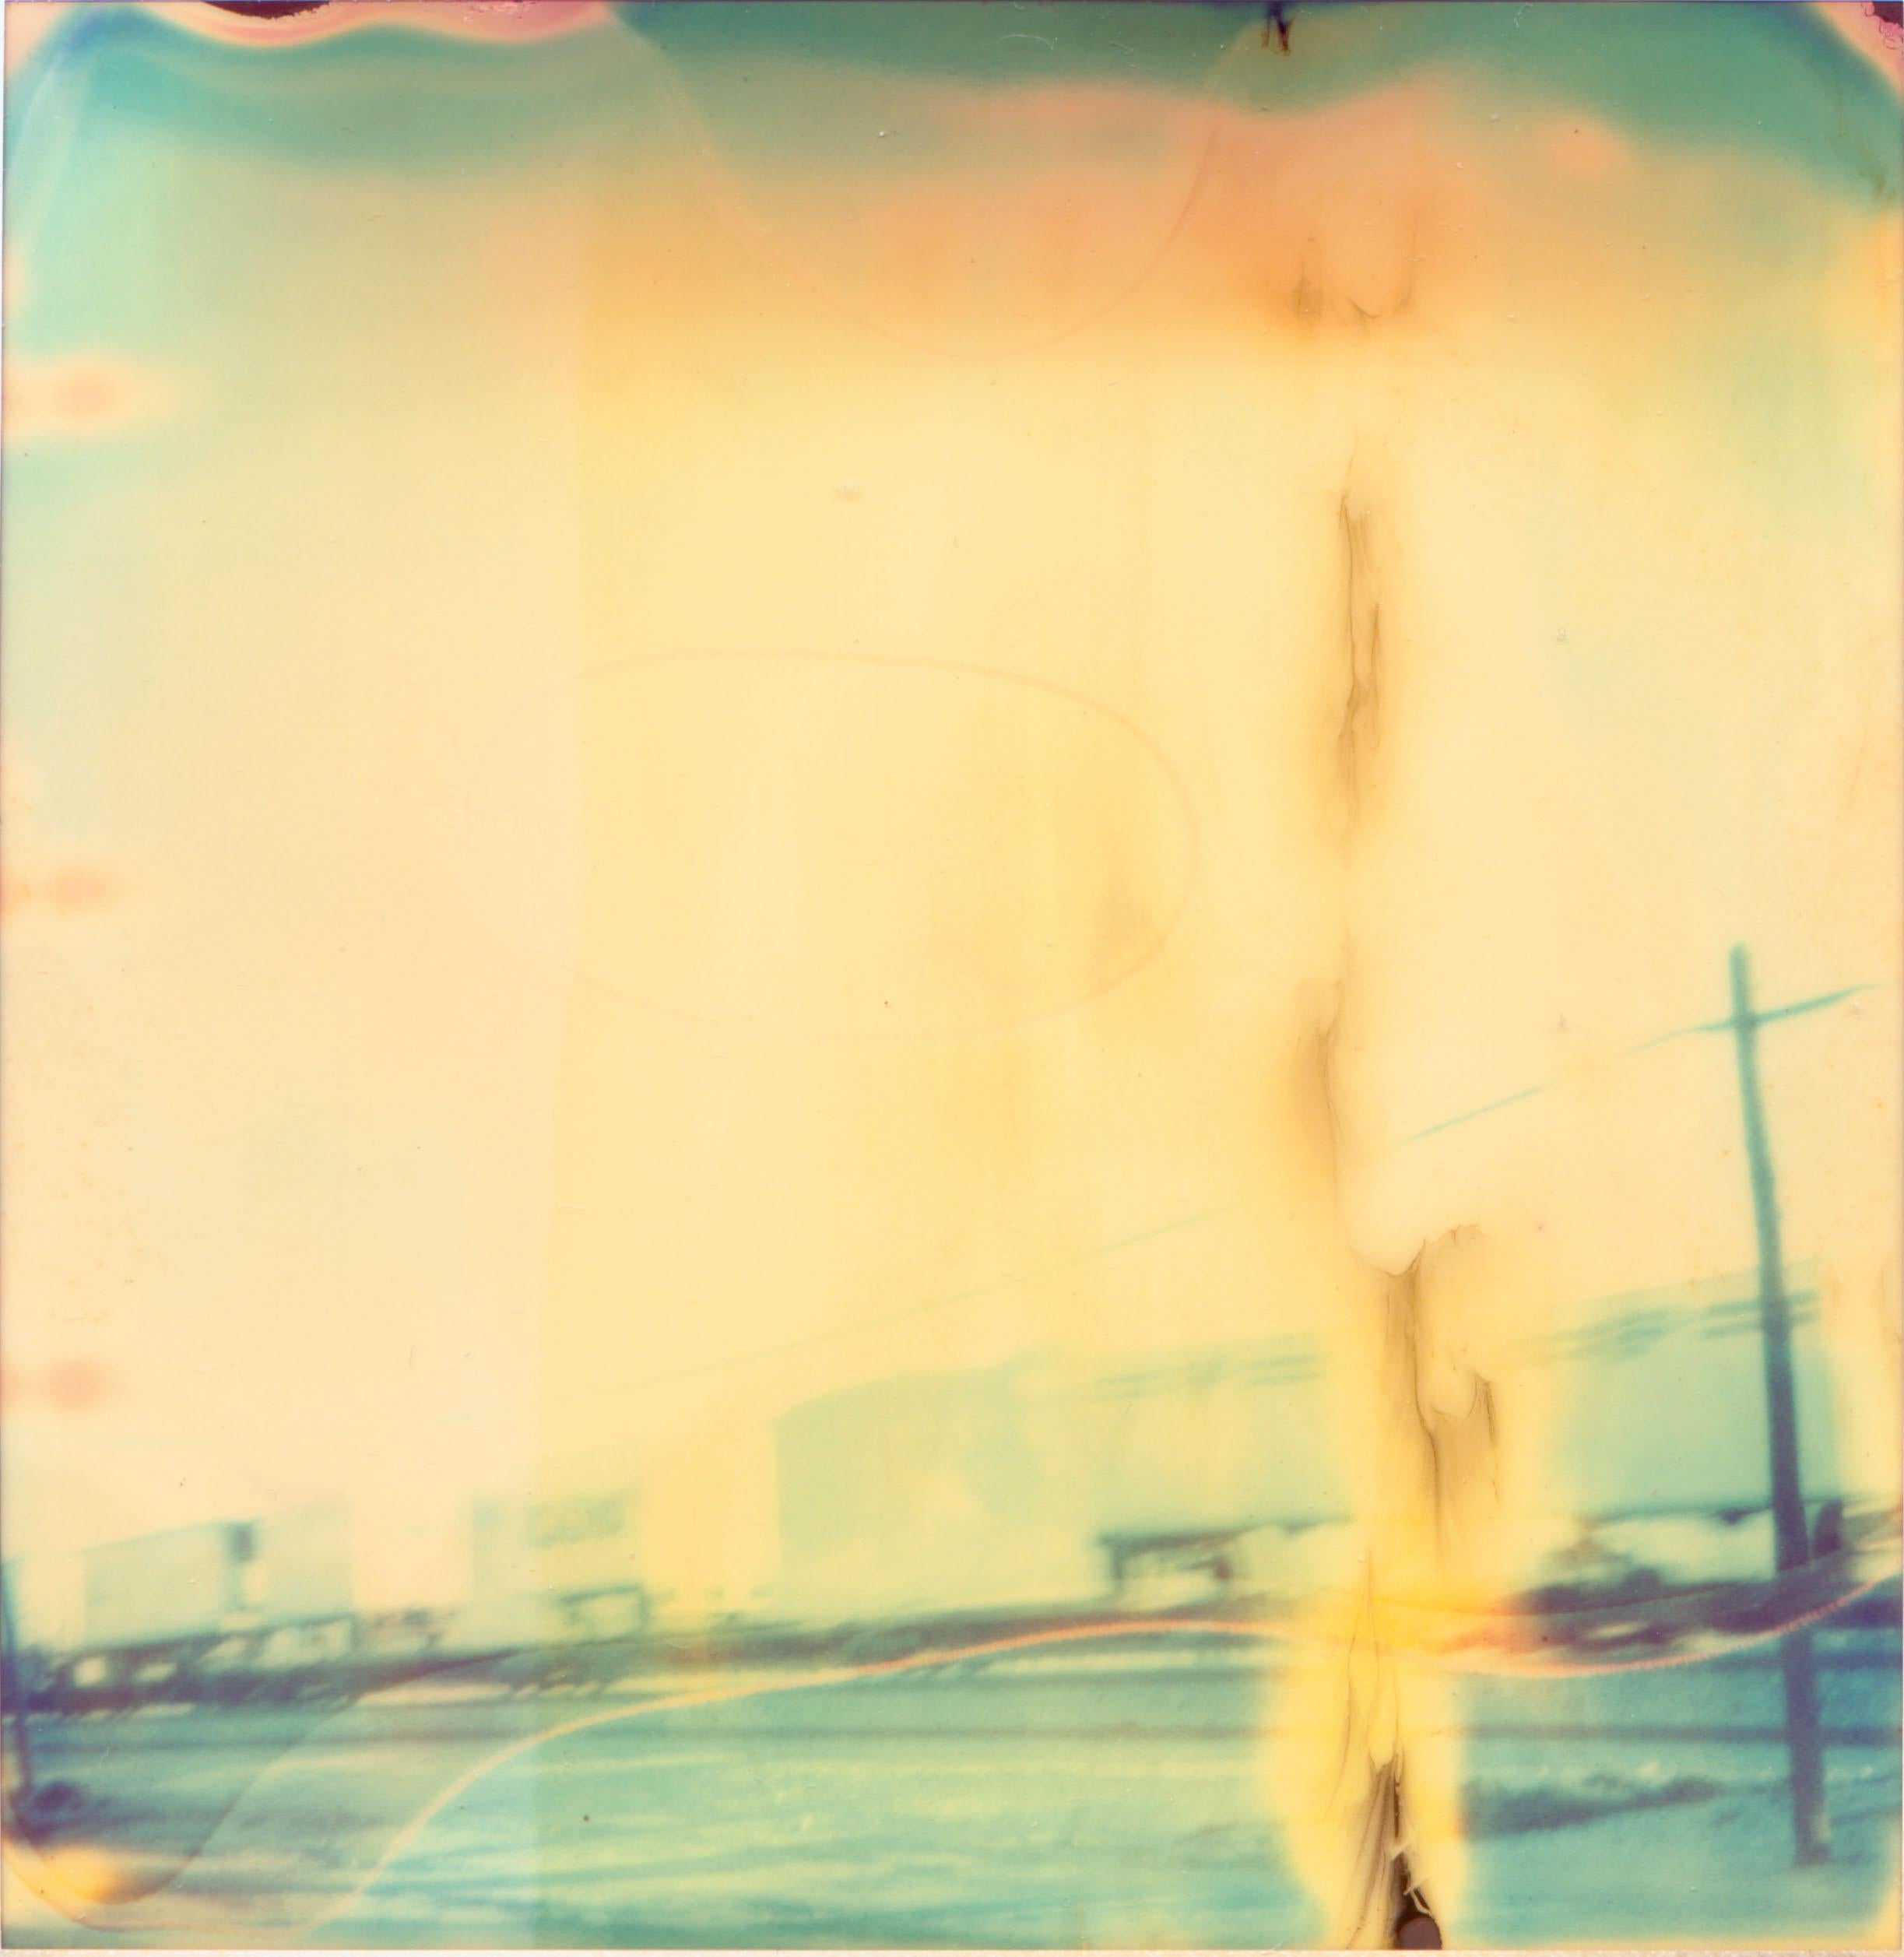 Stefanie Schneider Abstract Photograph - Untitled (Traintracks) - based on a Polaroid